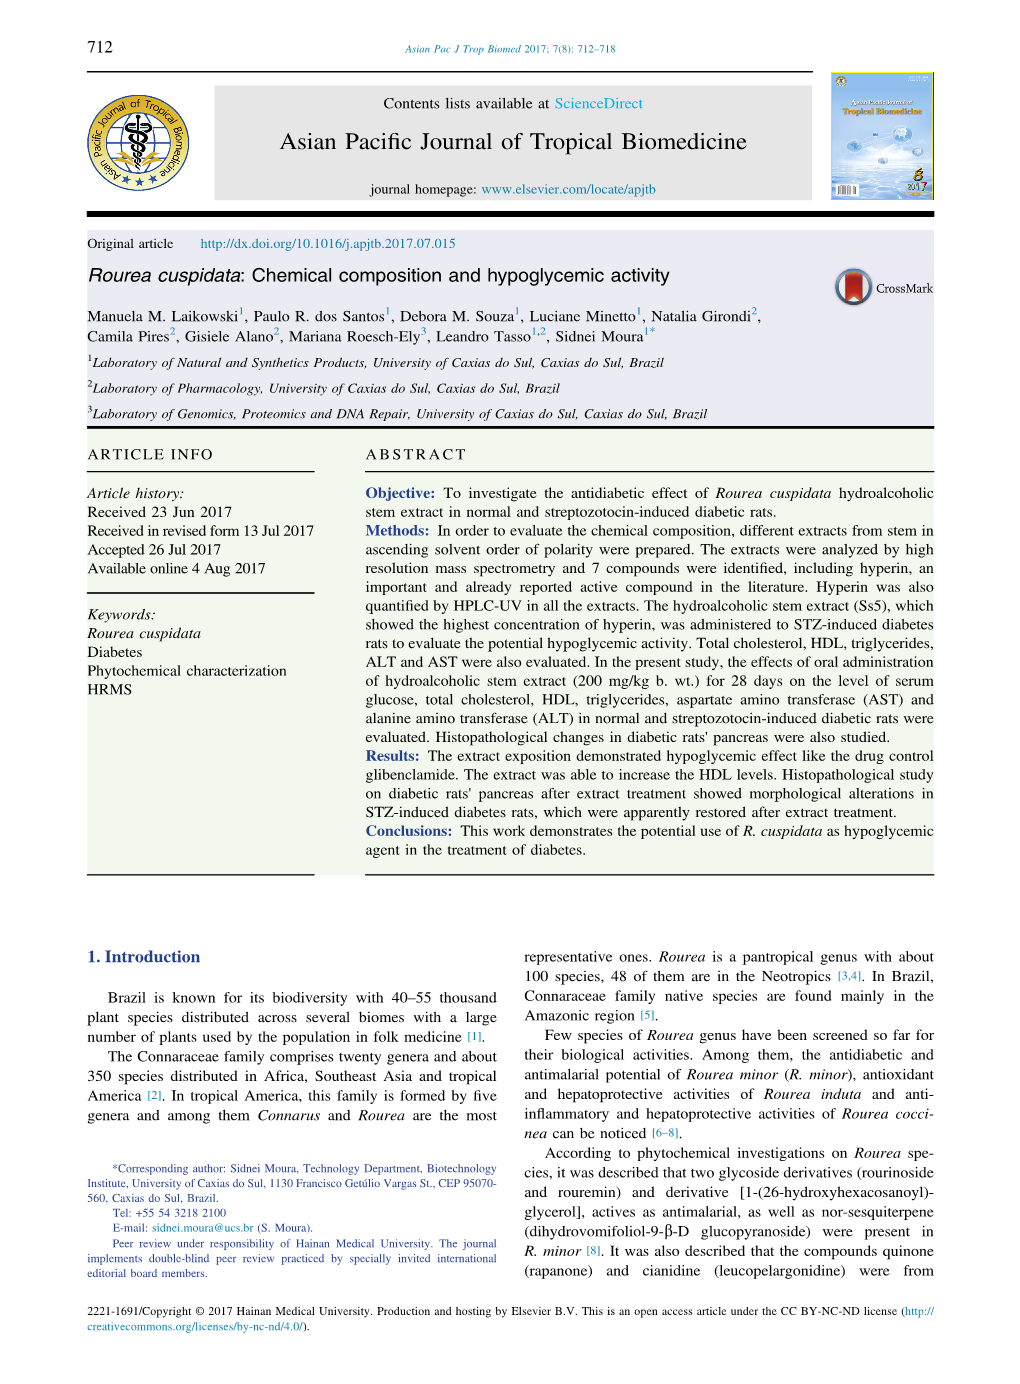 Rourea Cuspidata: Chemical Composition and Hypoglycemic Activity